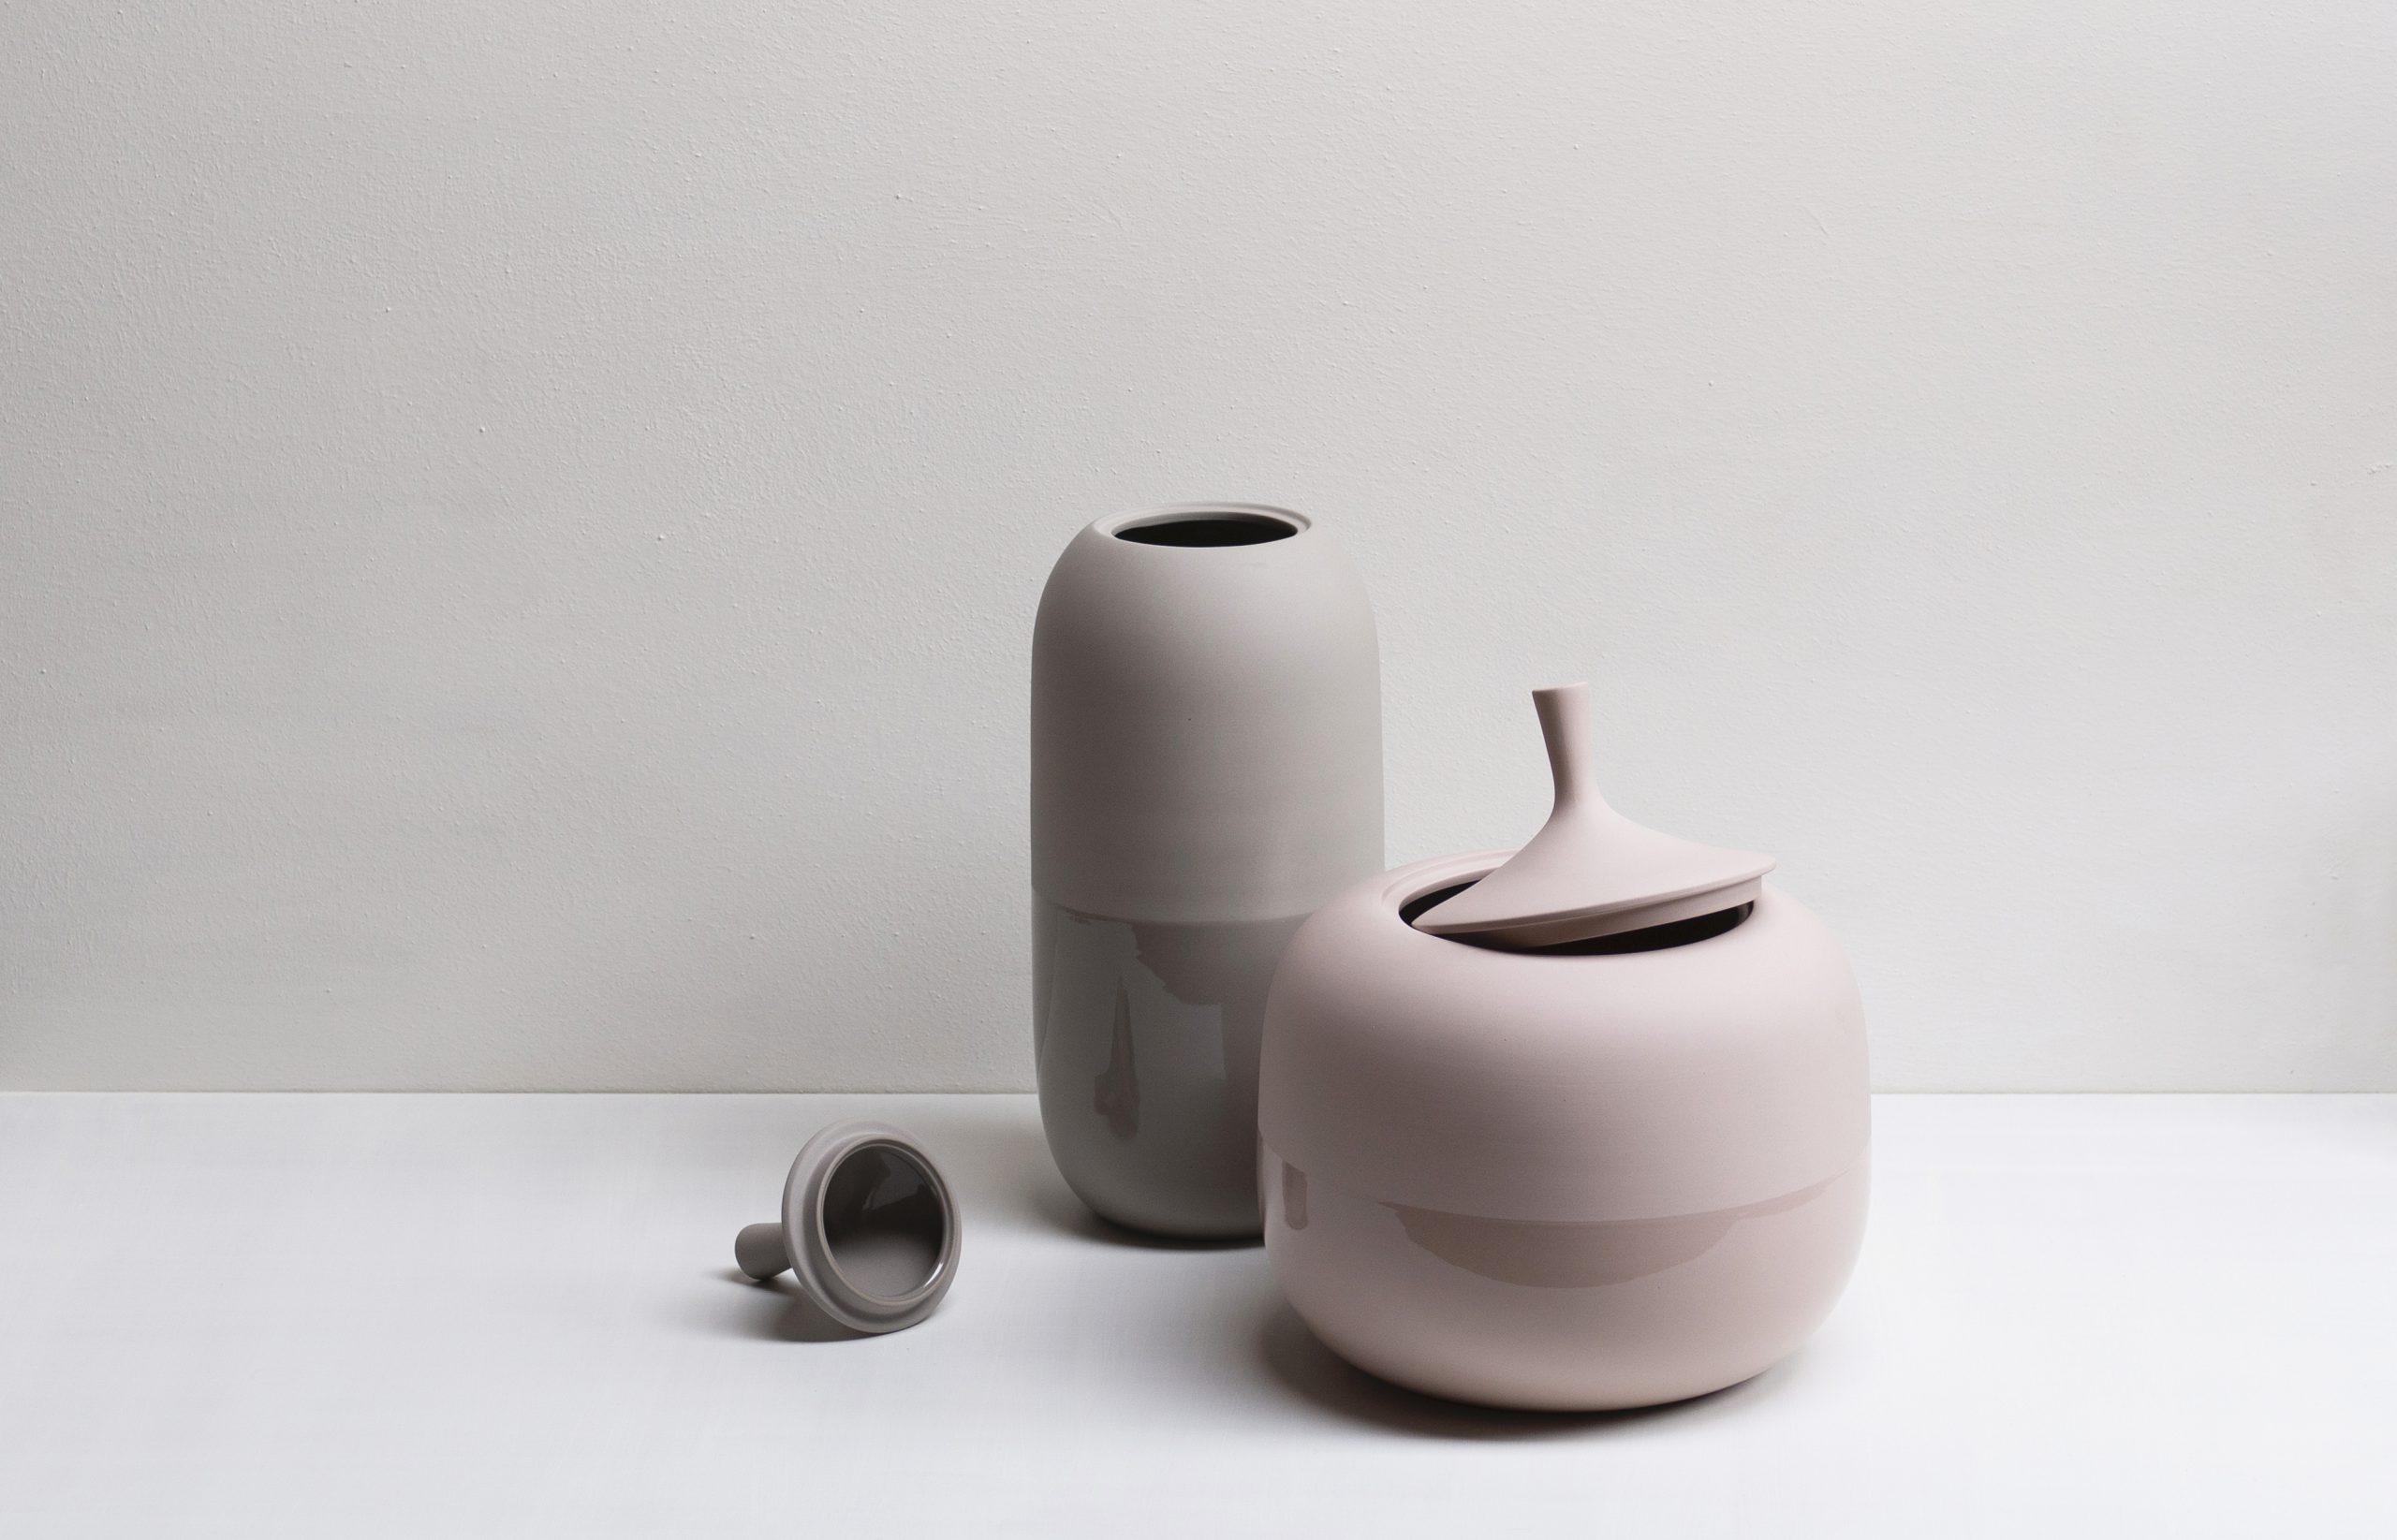 Pepo vases and containers by Debiasi Sandri for Normann Copenhagen